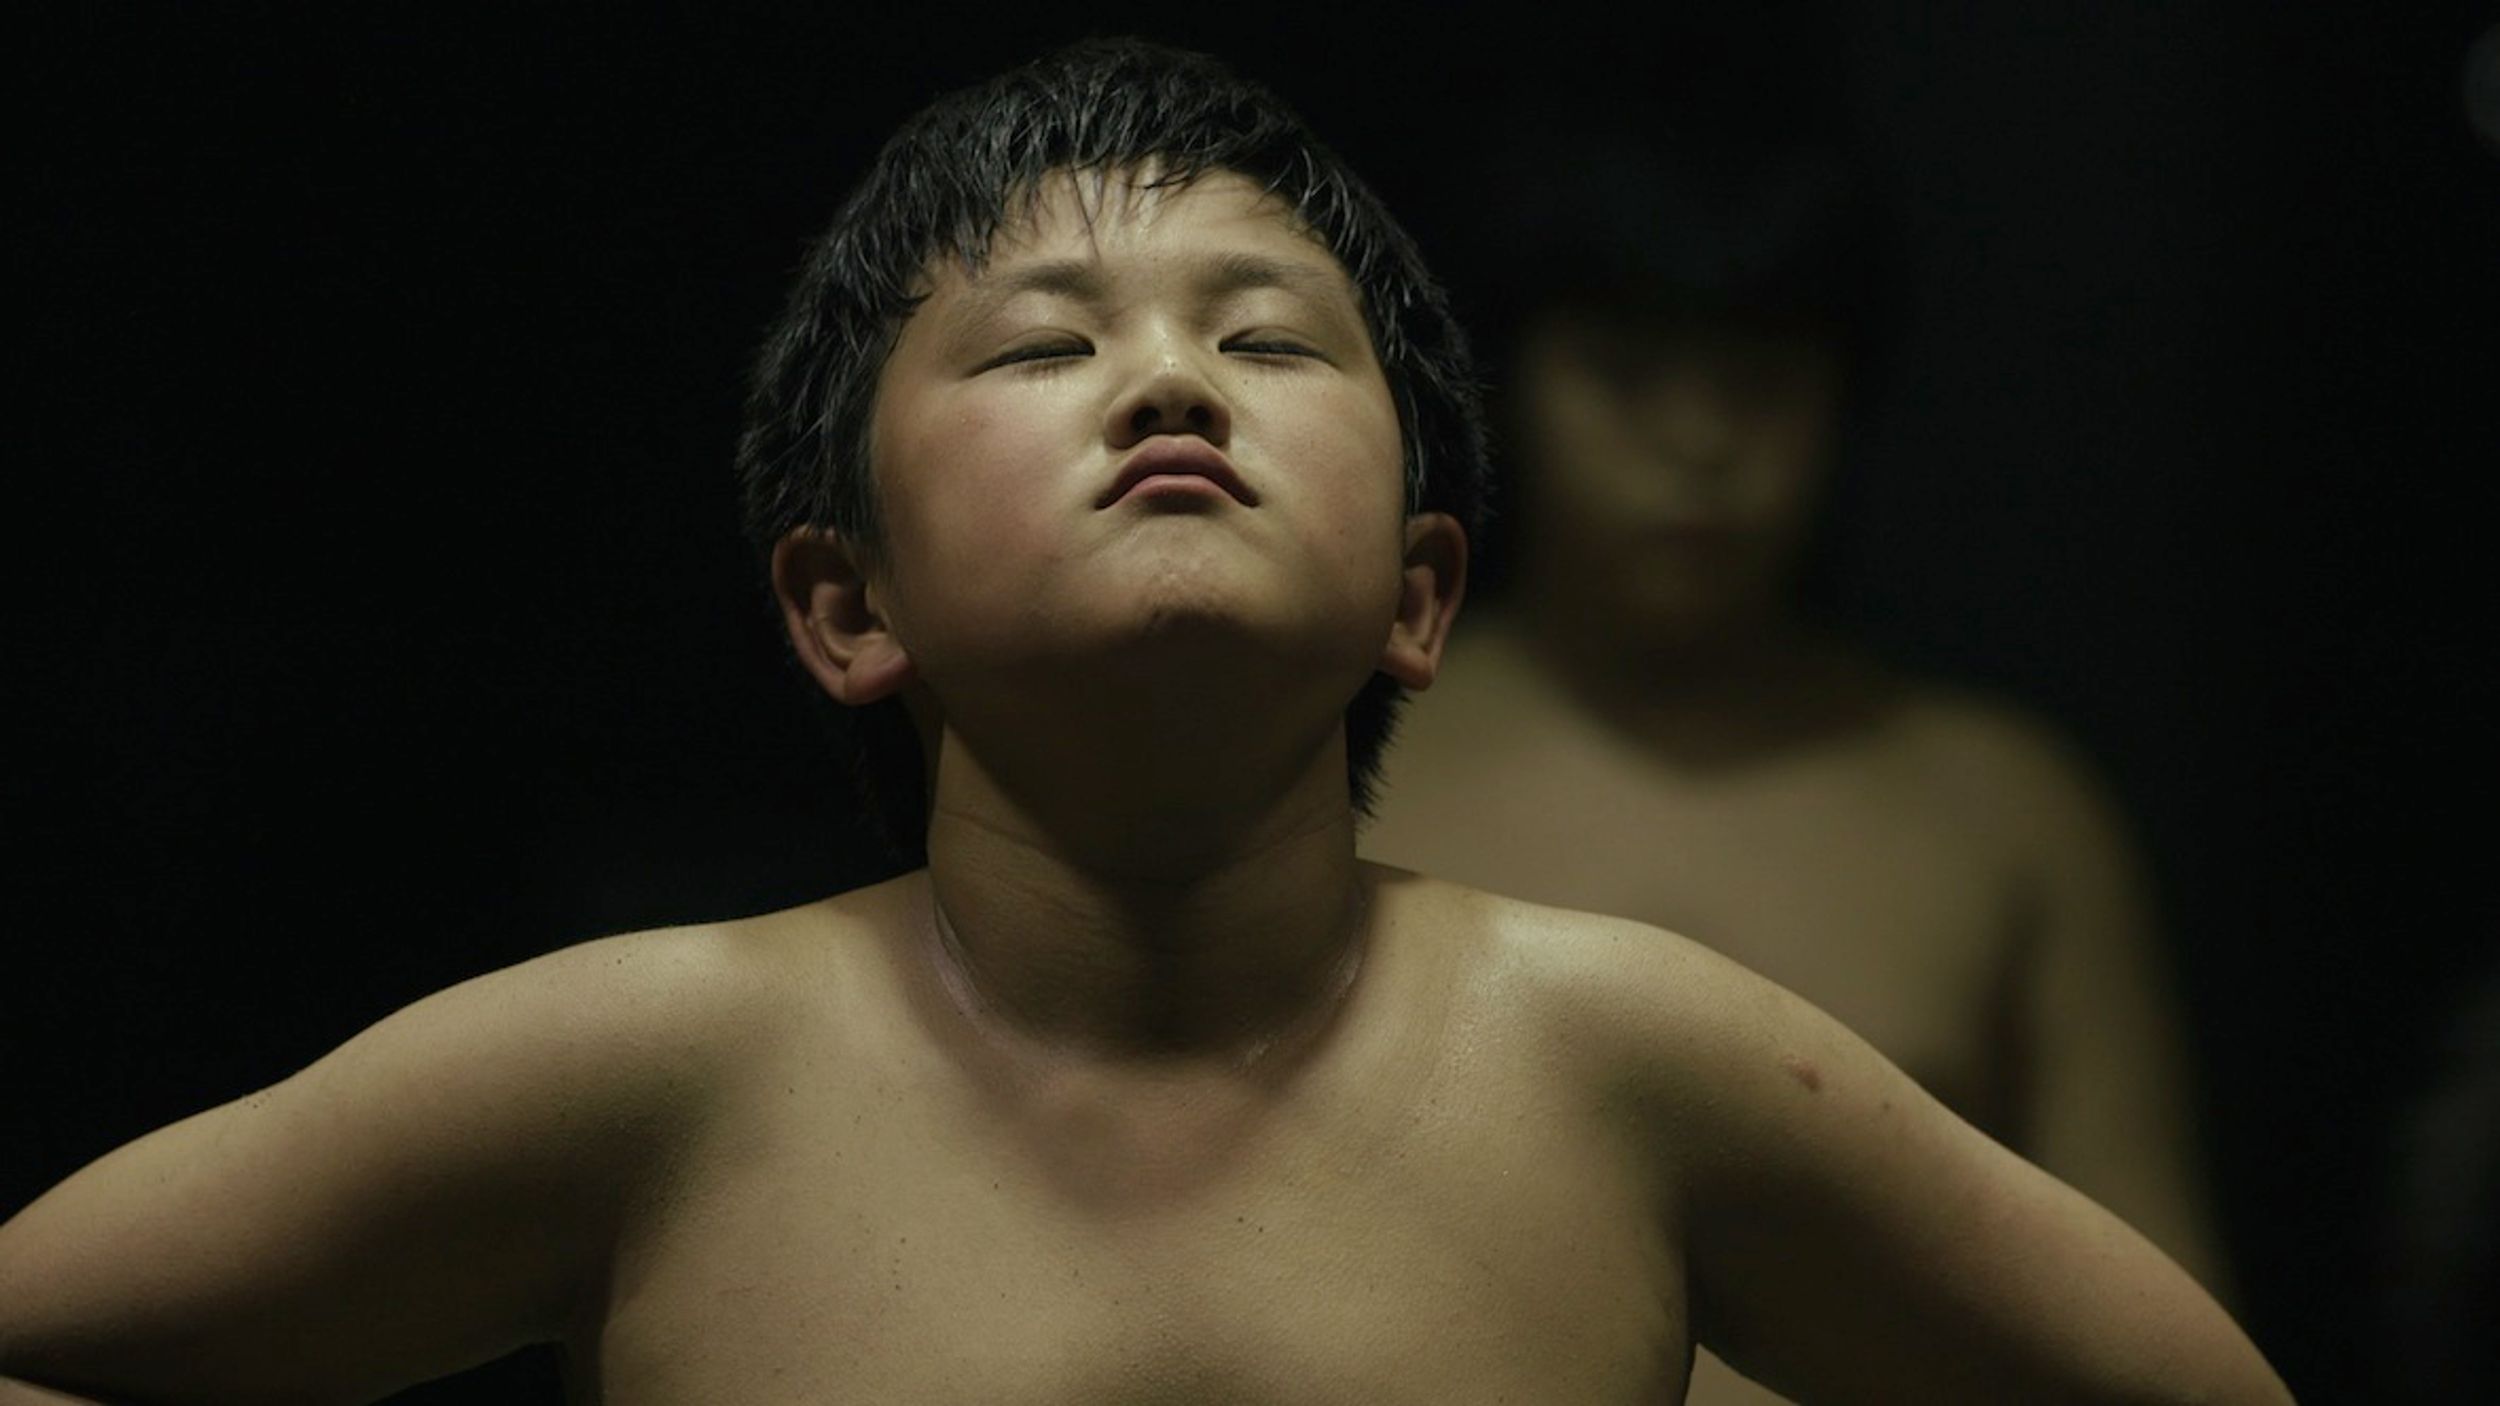 Chikara - The Sumo Wrestler's Son